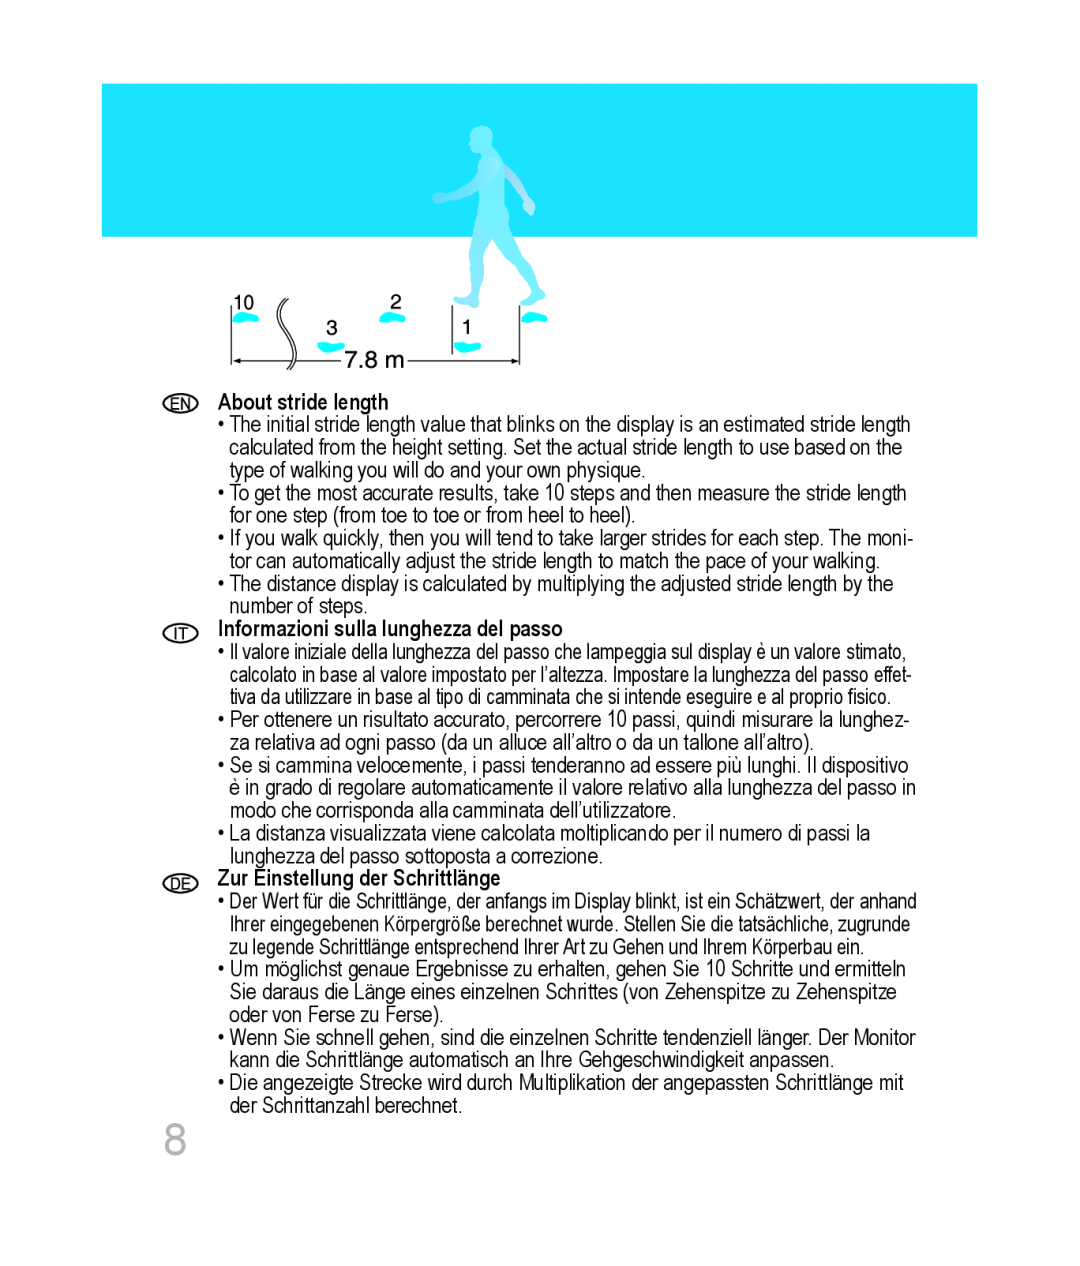 Omron hja-306 instruction manual Informazioni sulla lunghezza del passo, GHU6FKULWWDQDKOEHUHFKQHW 